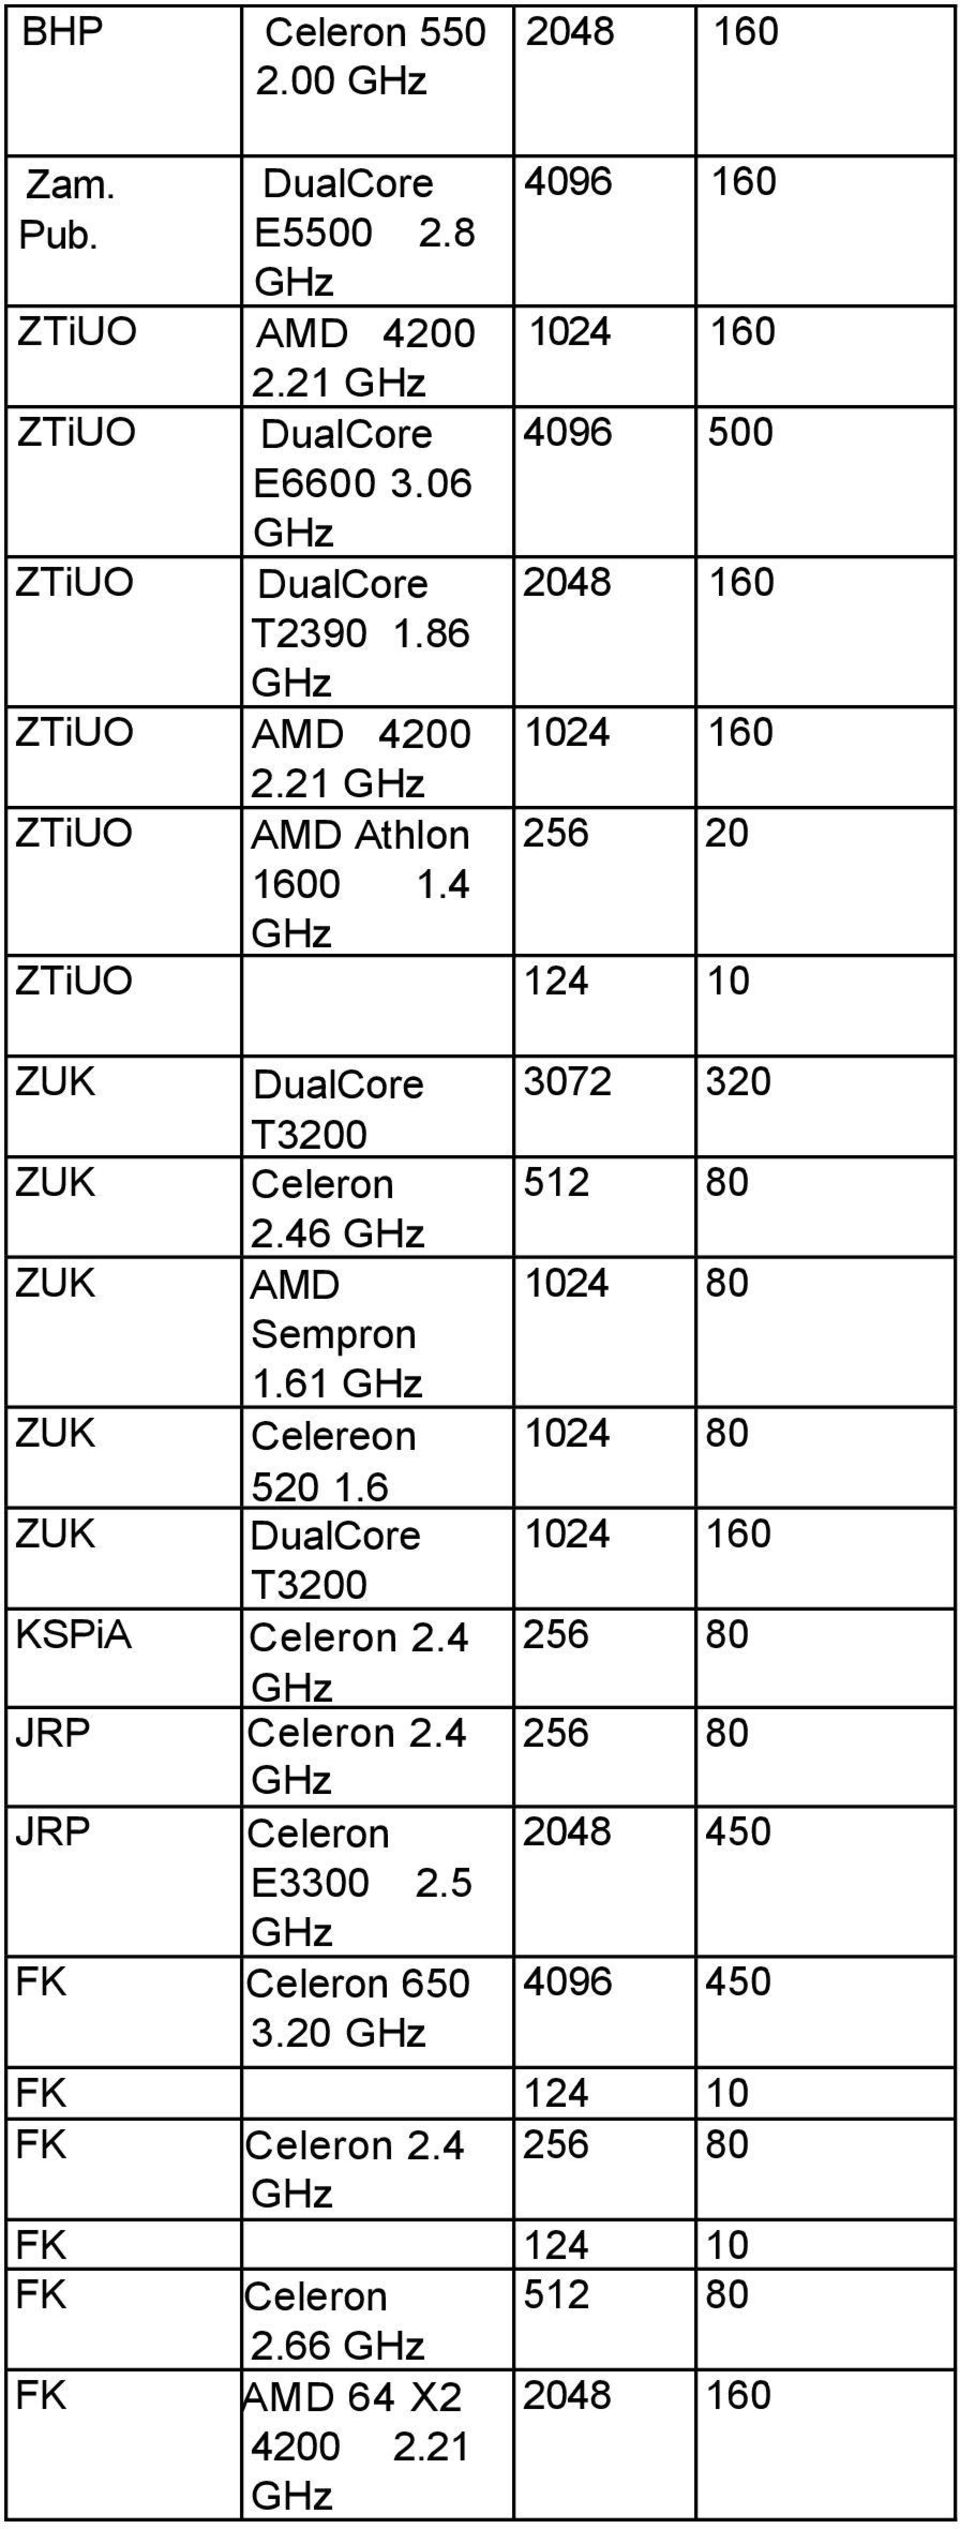 46 ZUK AMD Sempron 1.61 ZUK Celereon 520 1.6 ZUK DualCore T3200 KSPiA Celeron 2.4 JRP Celeron 2.4 JRP Celeron E3300 2.5 FK Celeron 650 3.